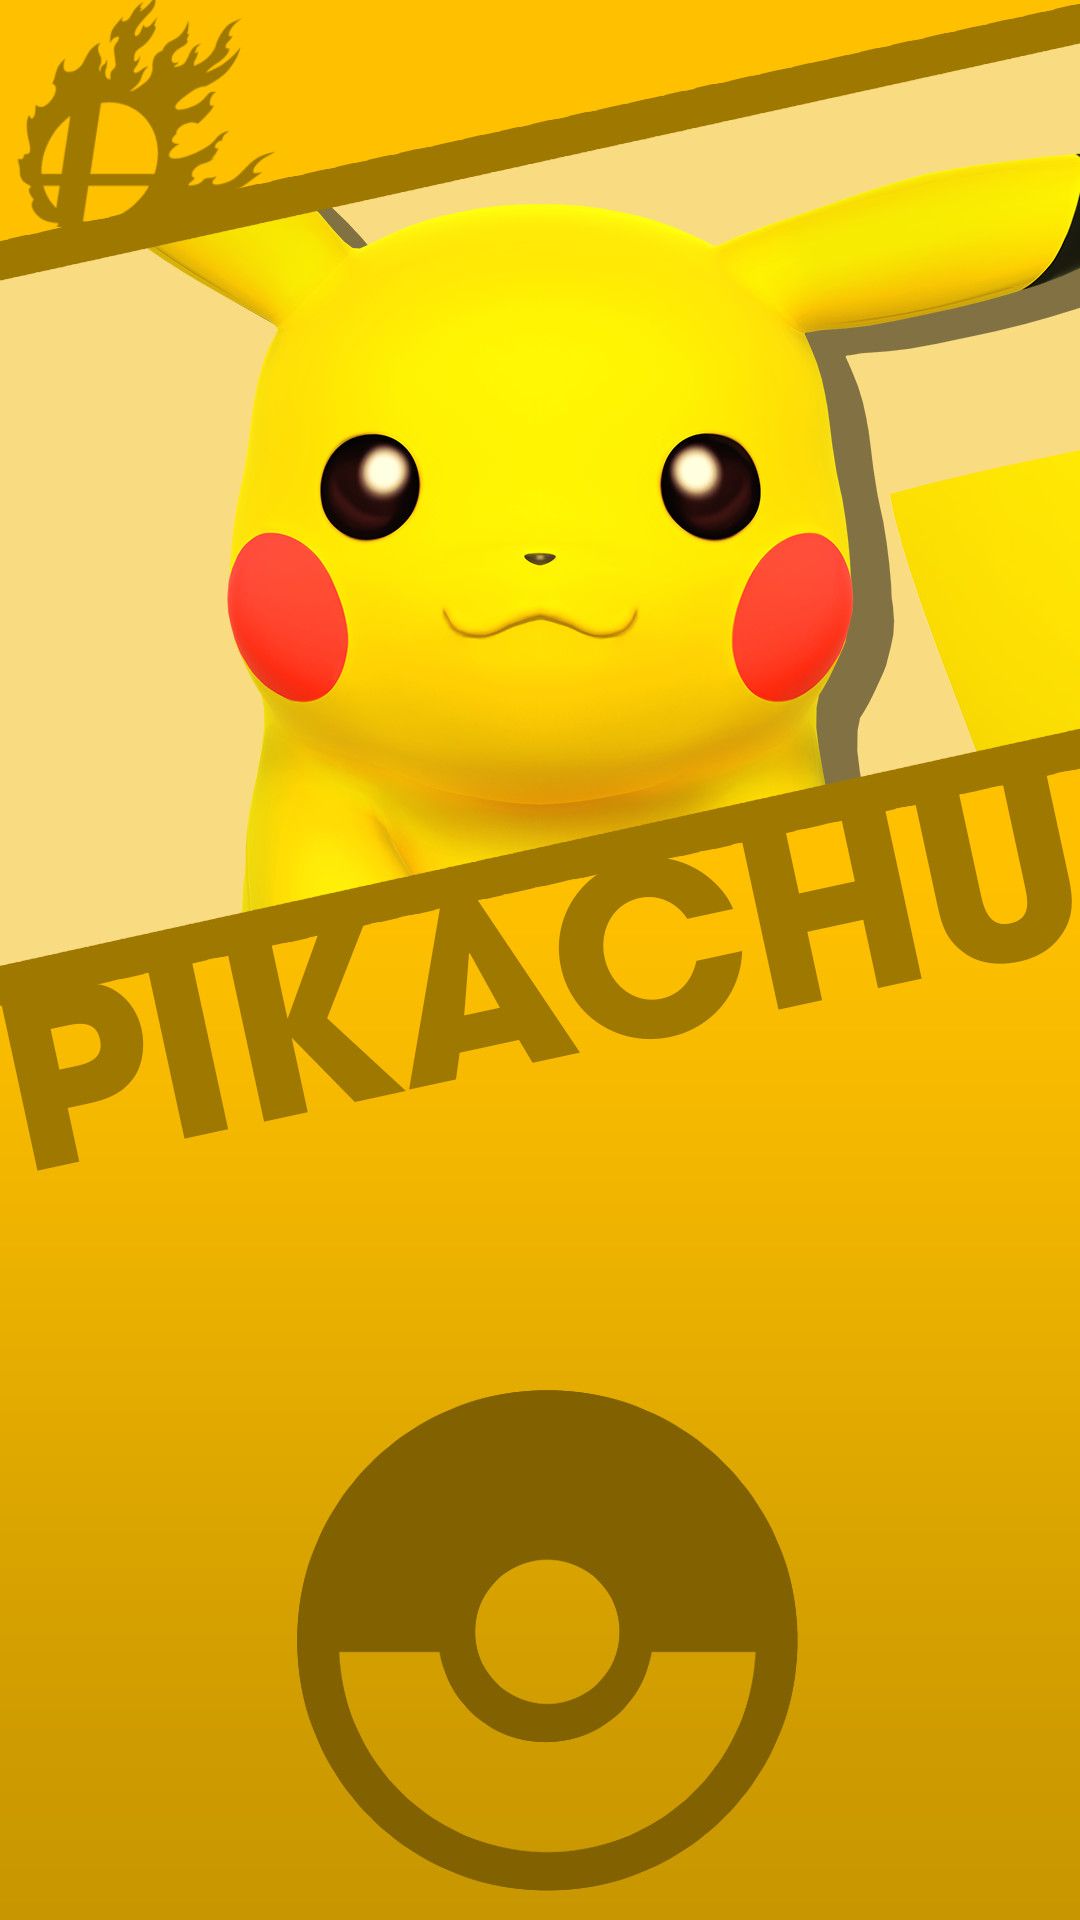 1080x Video Game Pokemon iPhone Background Smash Bros Wallpaper Phone